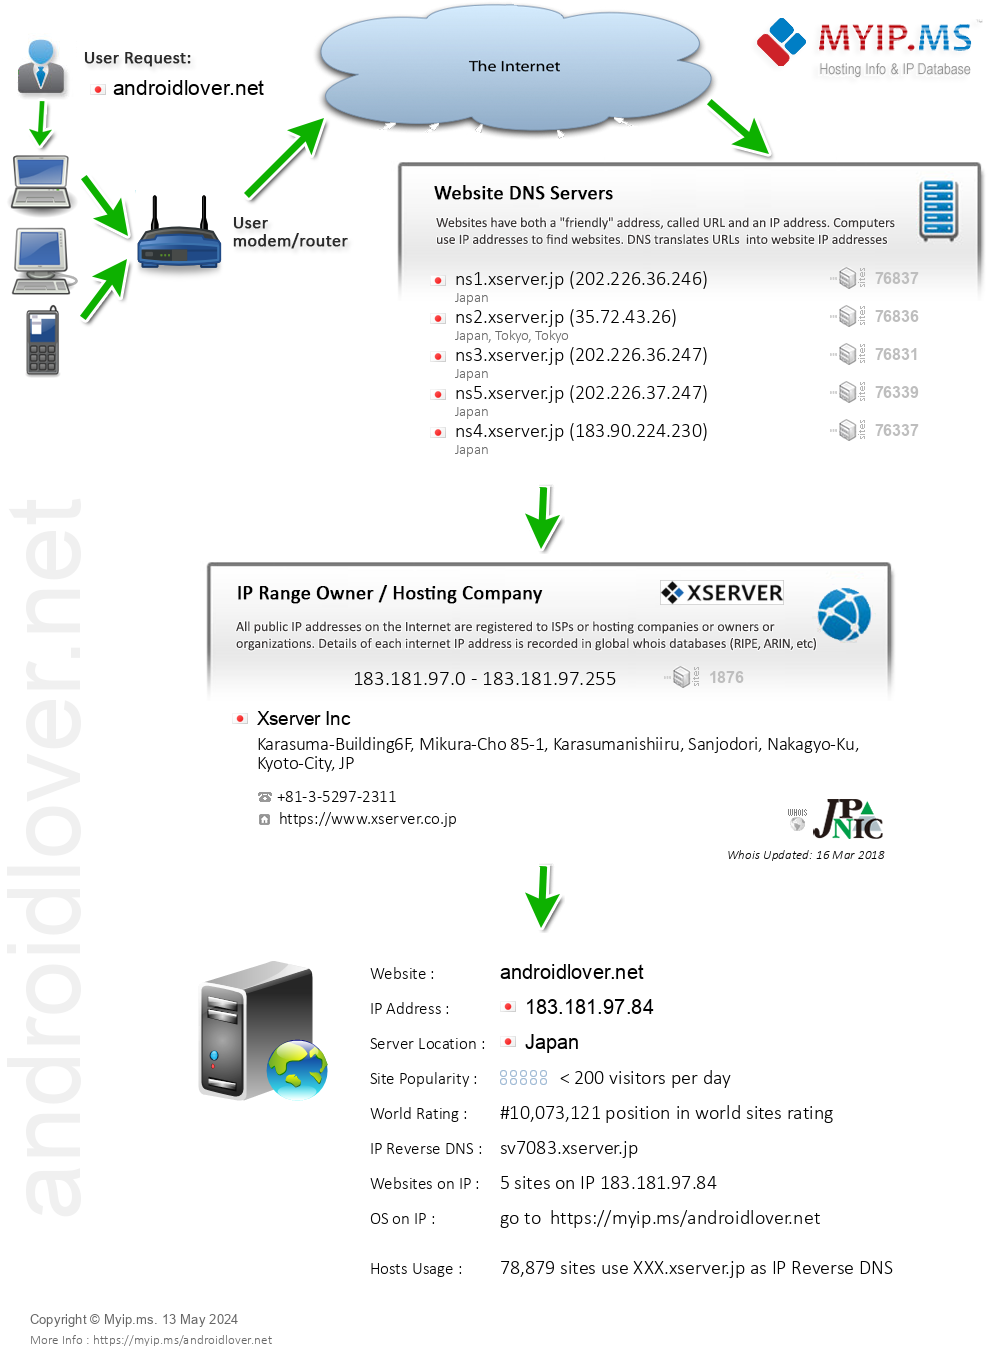 Androidlover.net - Website Hosting Visual IP Diagram